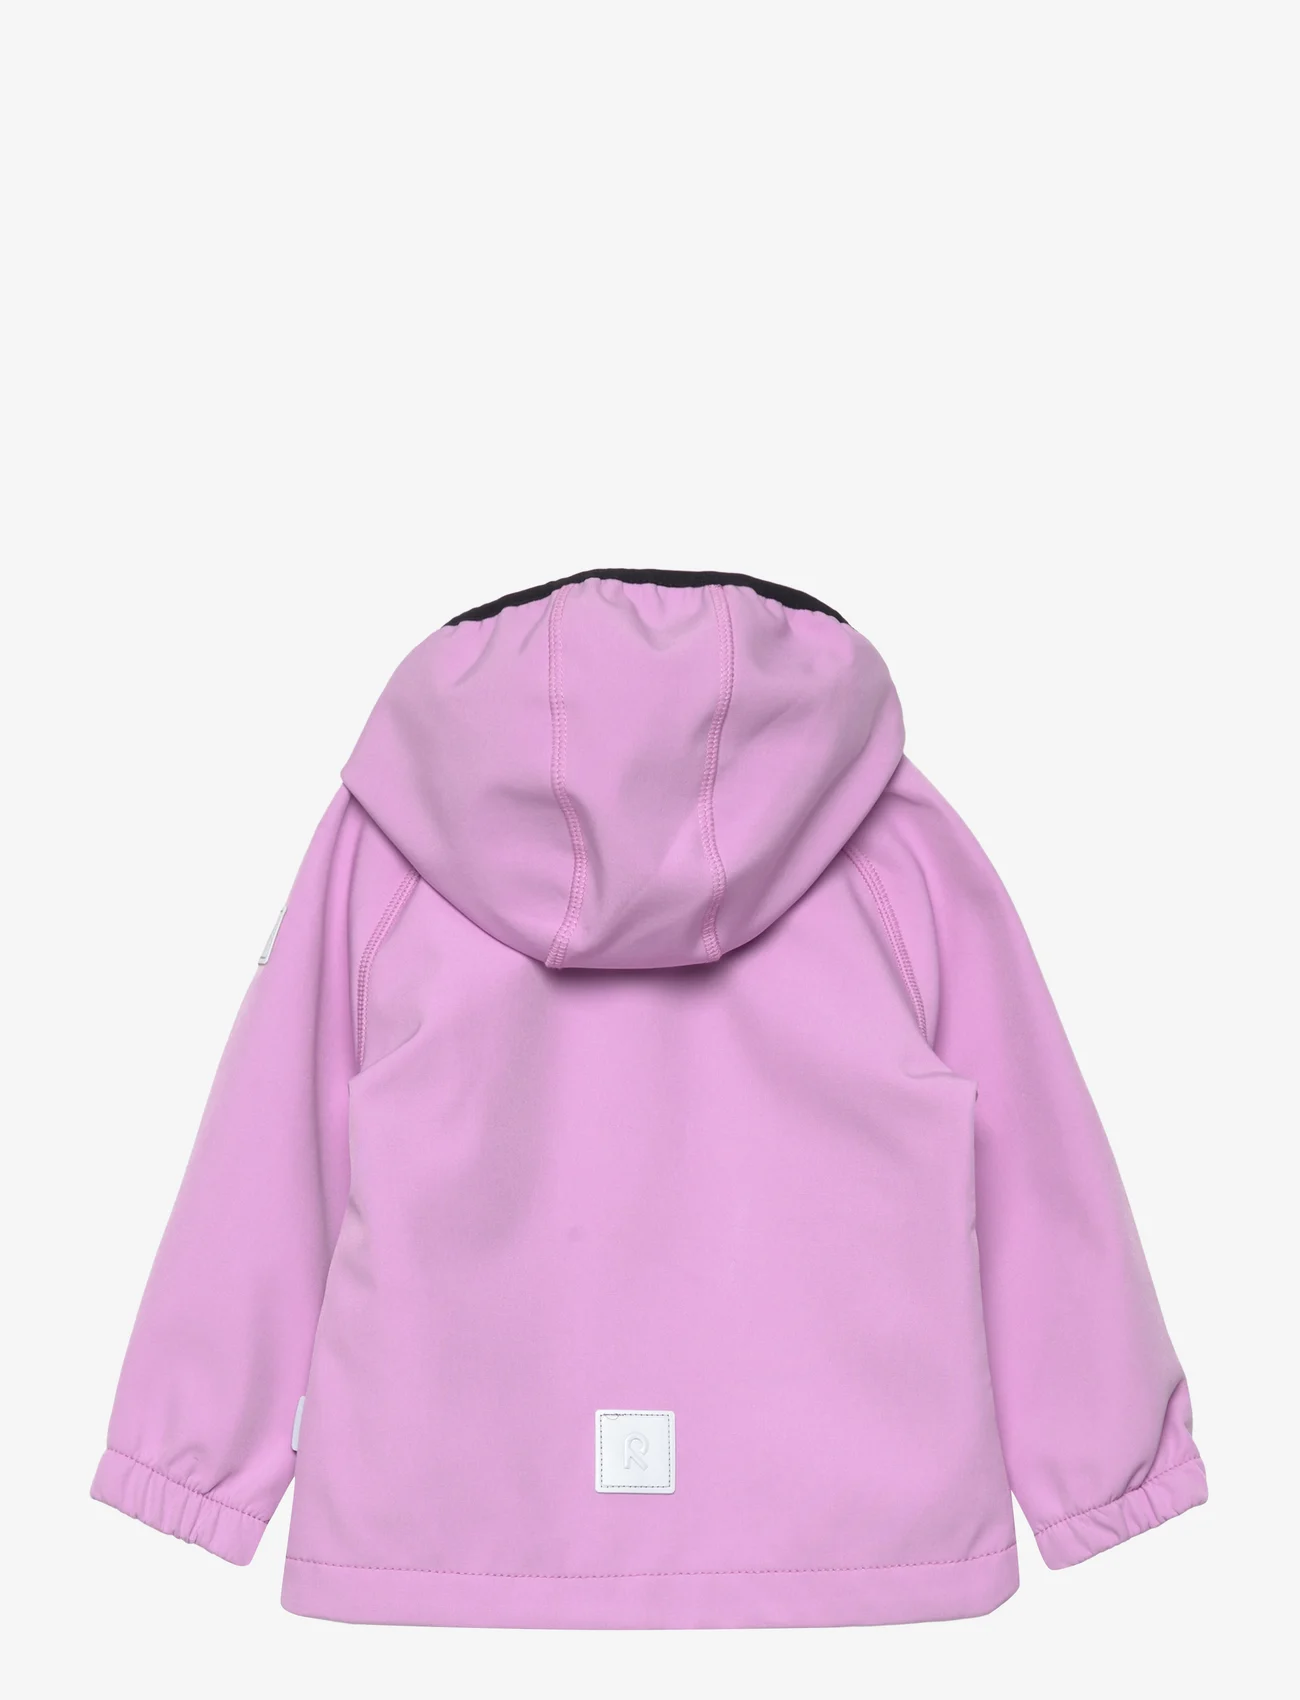 Reima - Kids' softshell jacket Vantti - lapset - lilac pink - 1